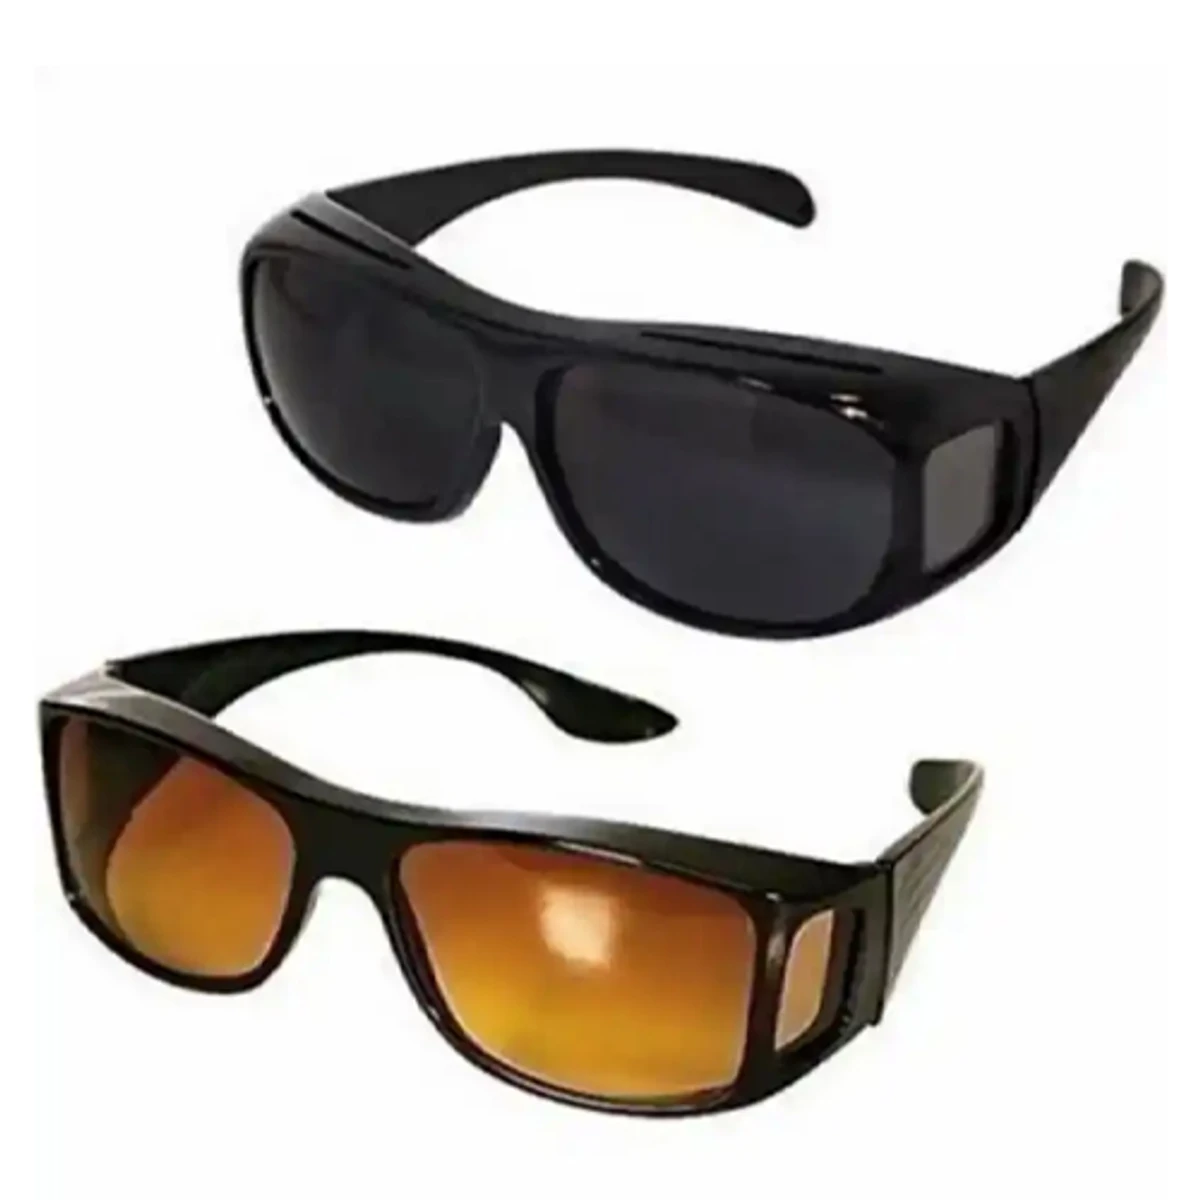 2 in 1 HD Night vision sunglasses